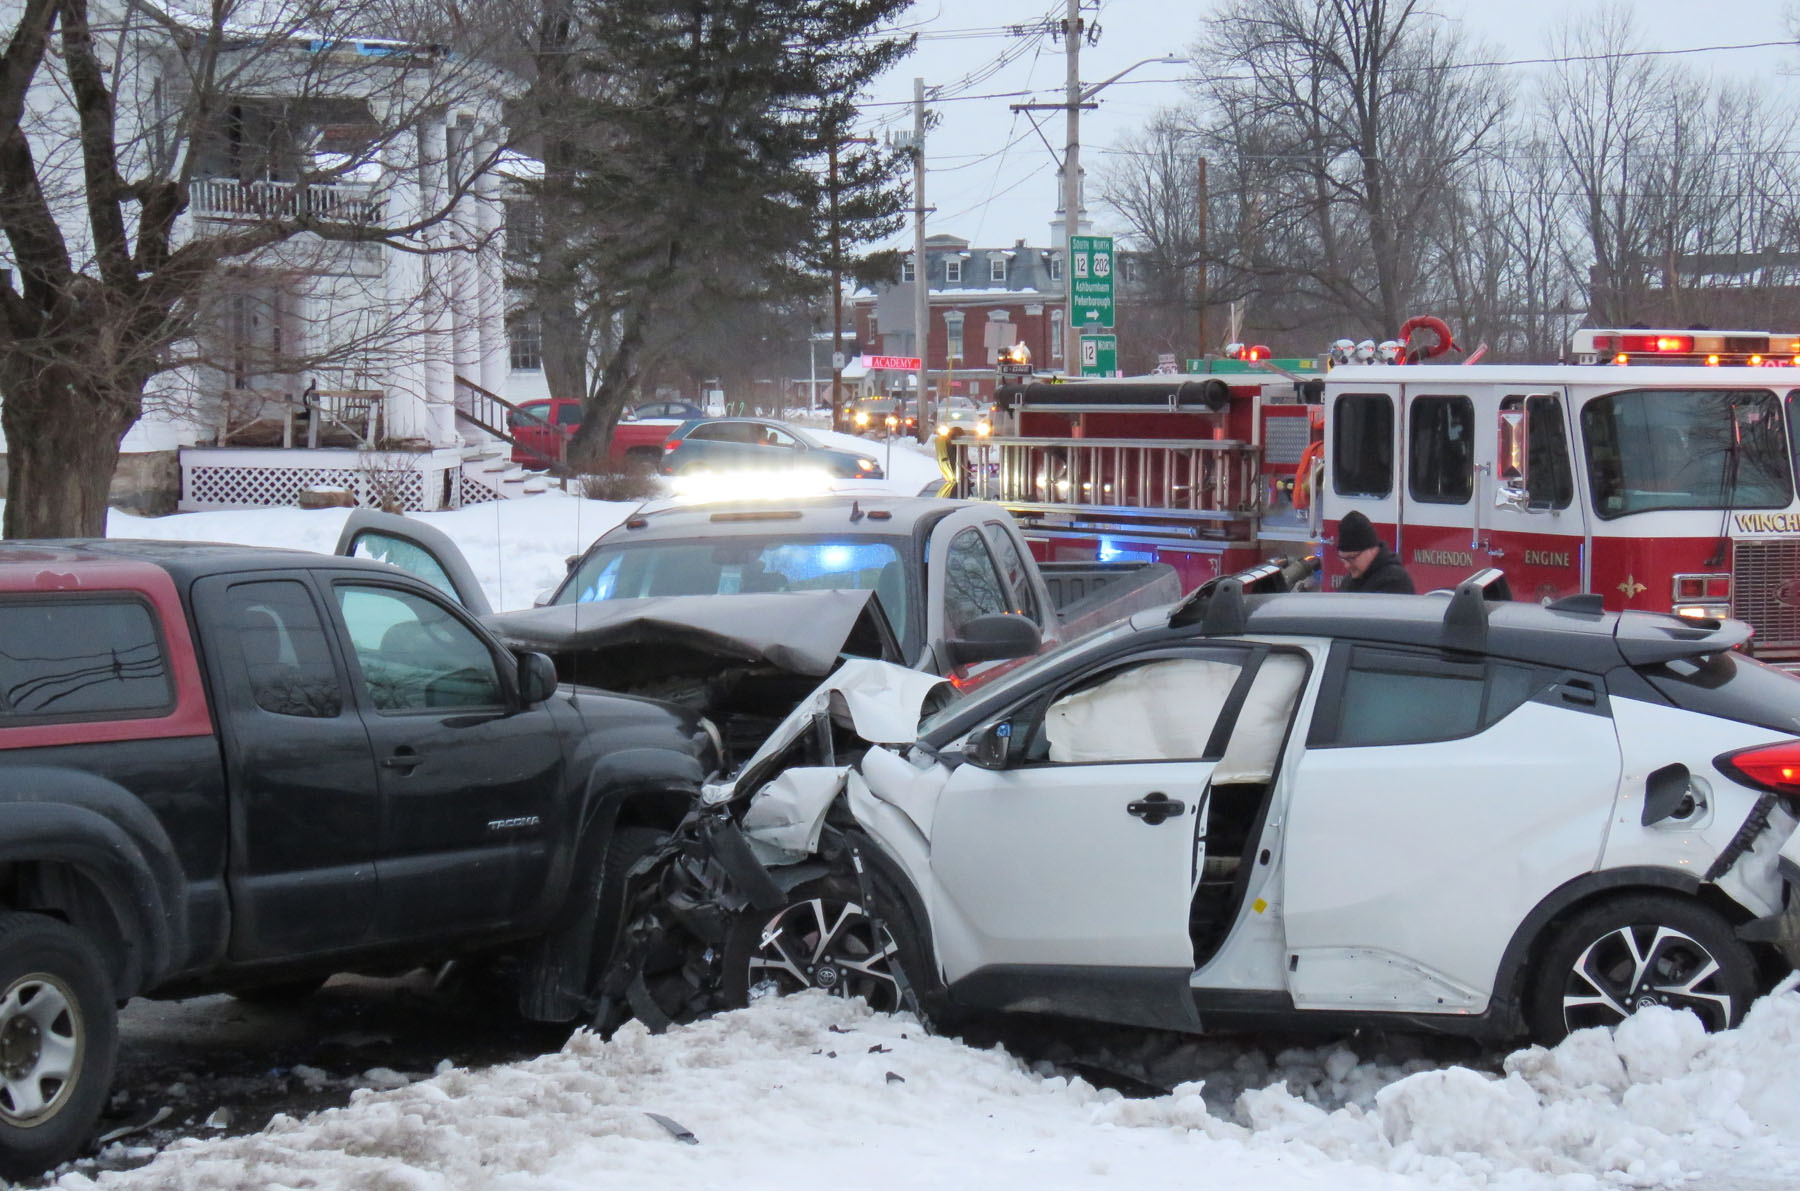 multi-vehicle accident on January 23